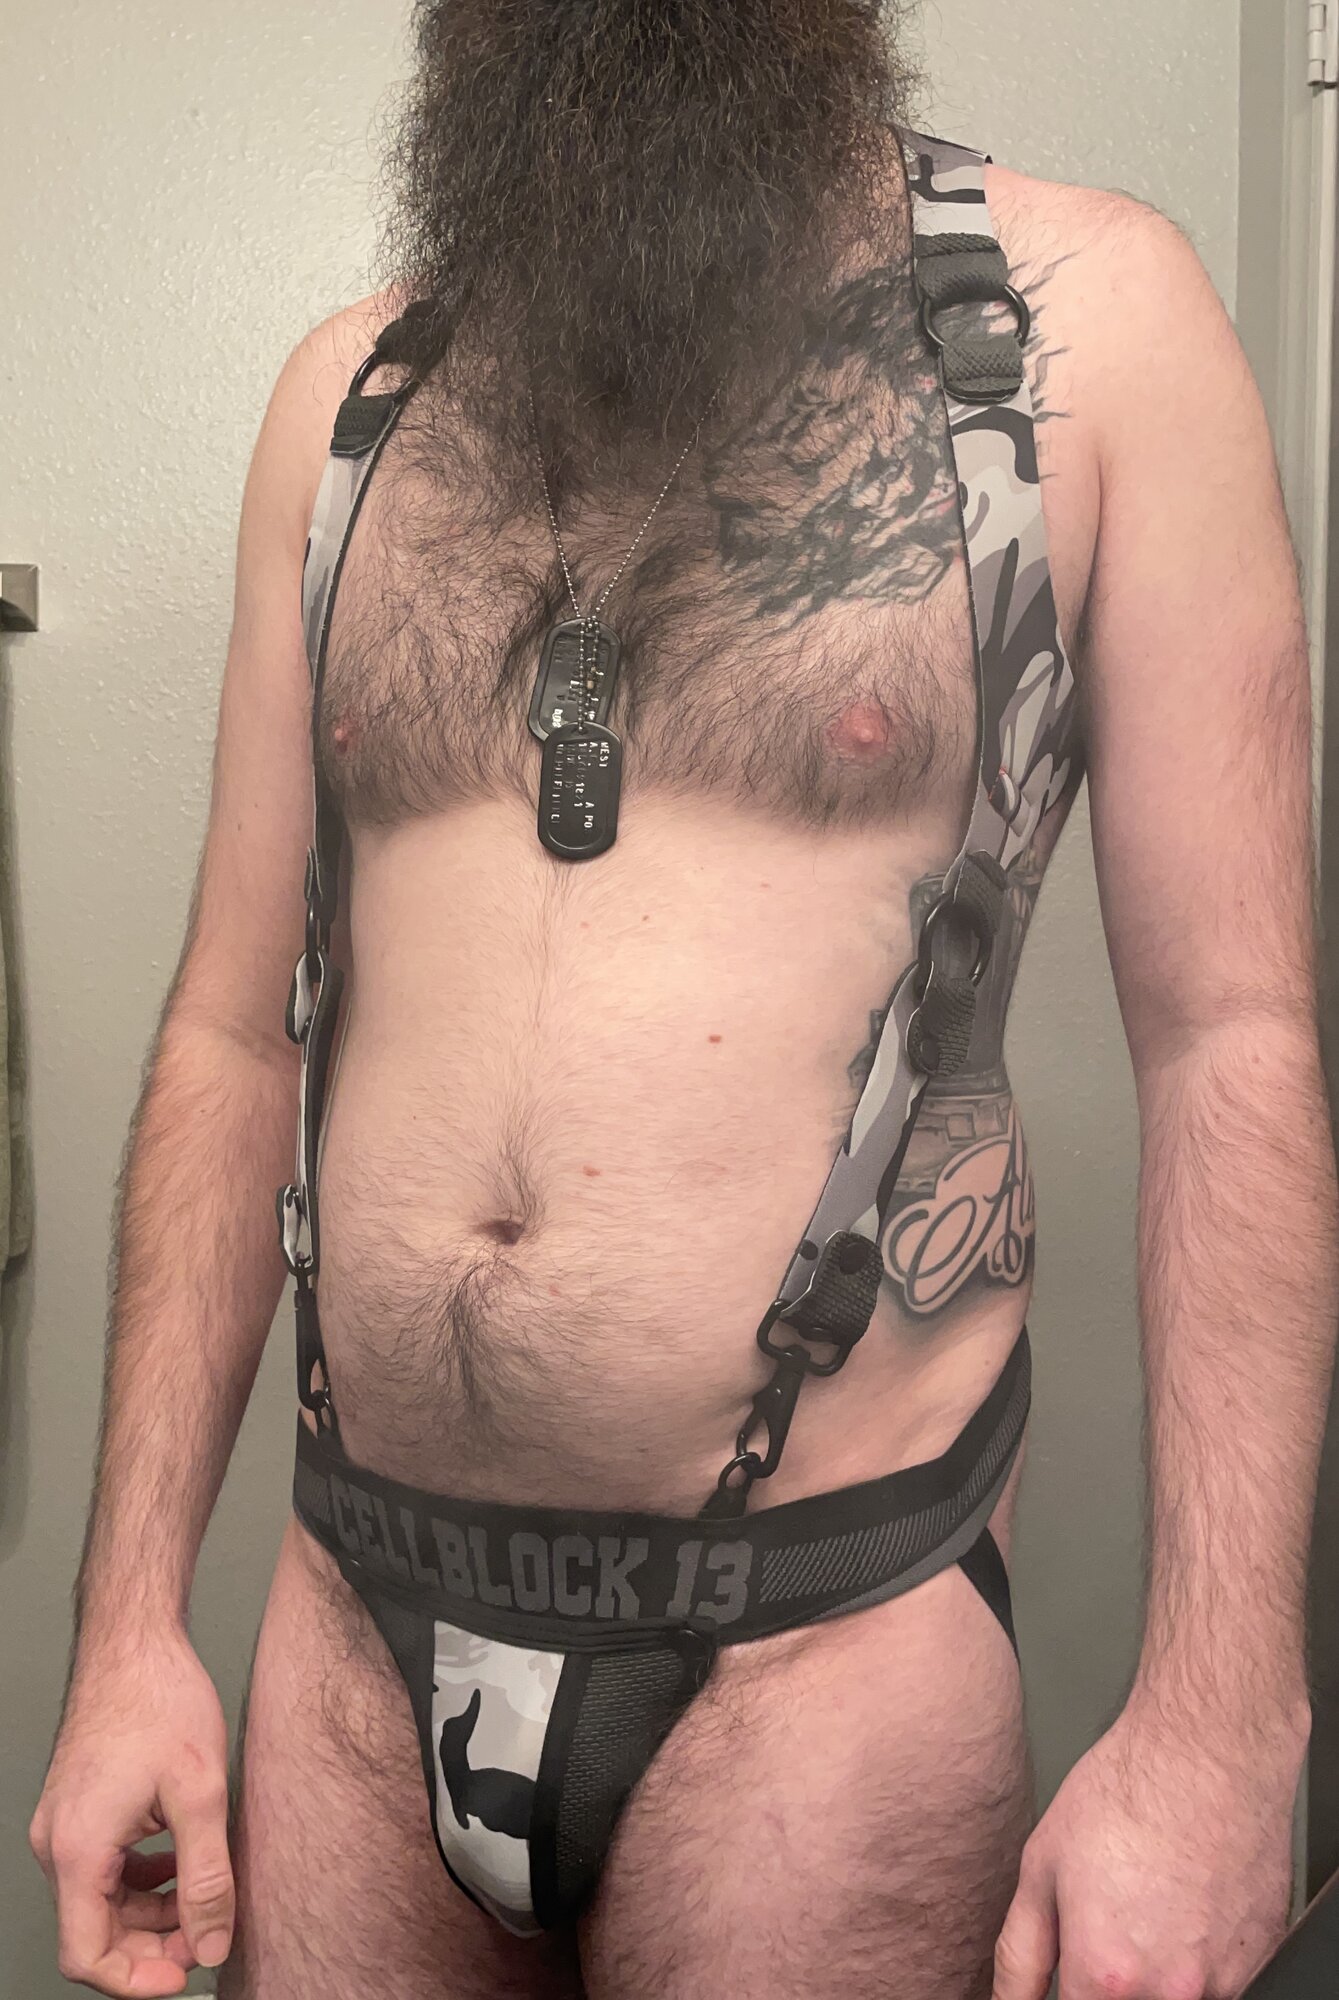 Cellblock 13 w/ matching harness